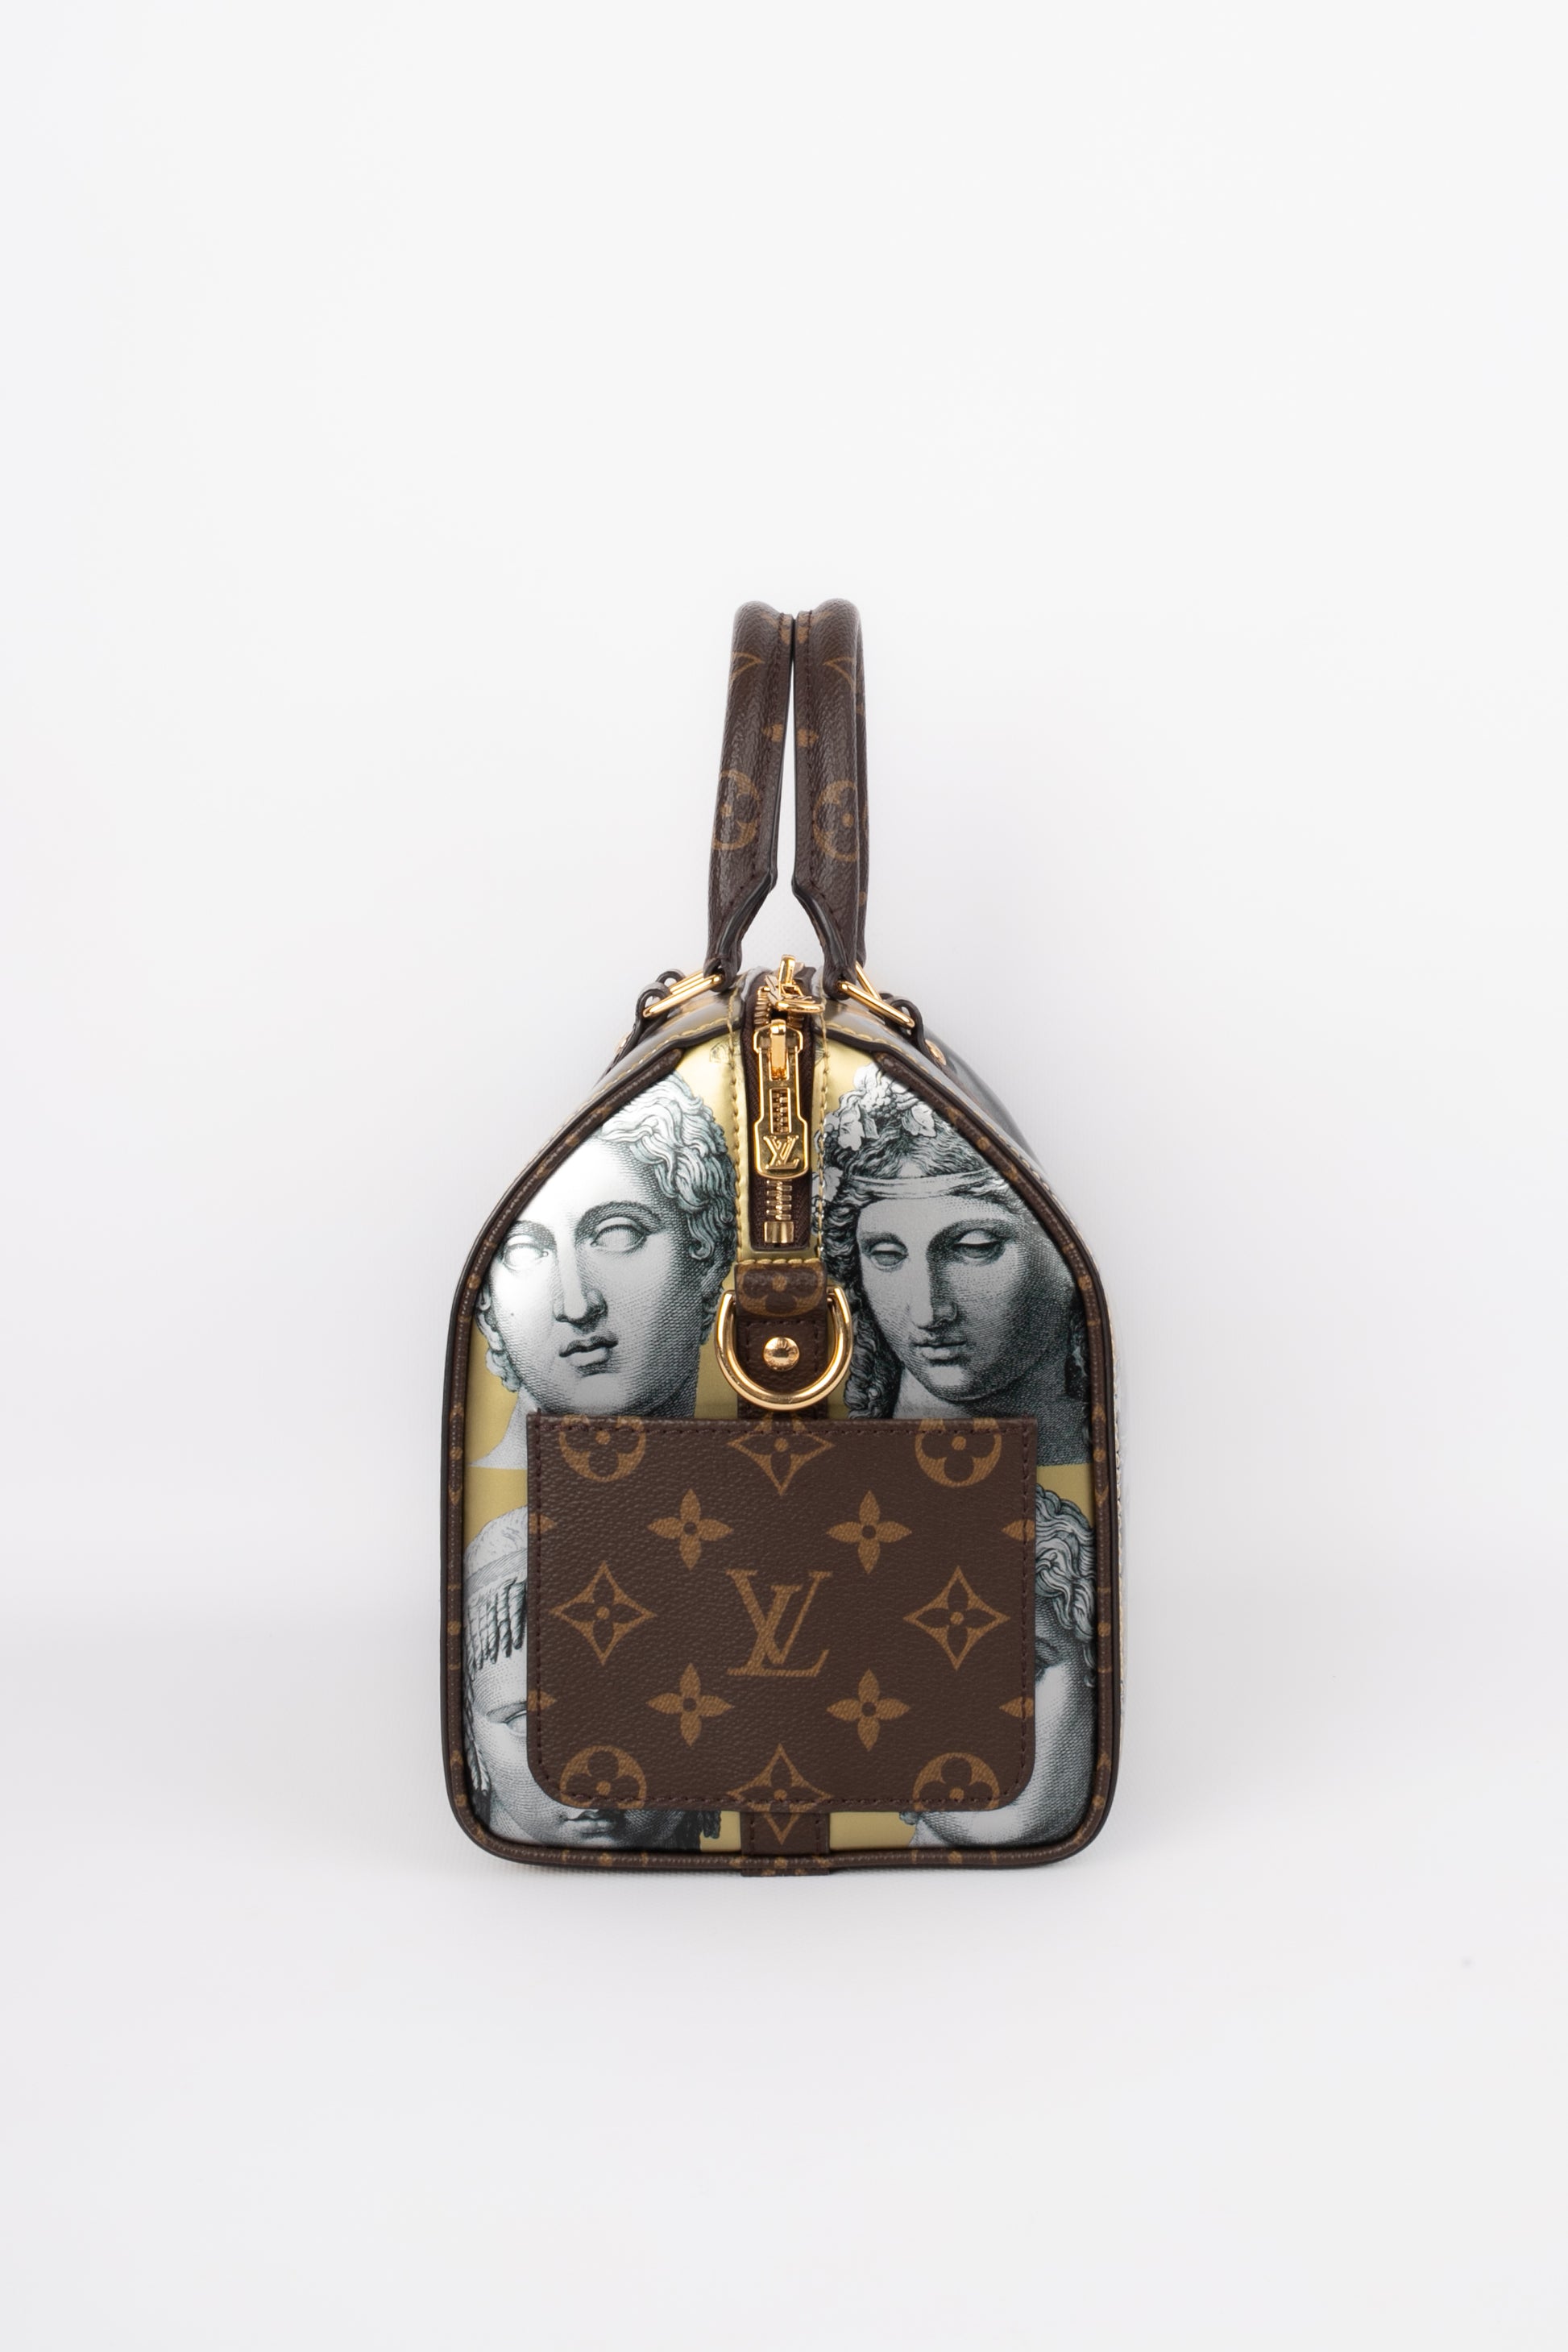 Sac Speedy Louis Vuitton x Fornasetti Limited Edition